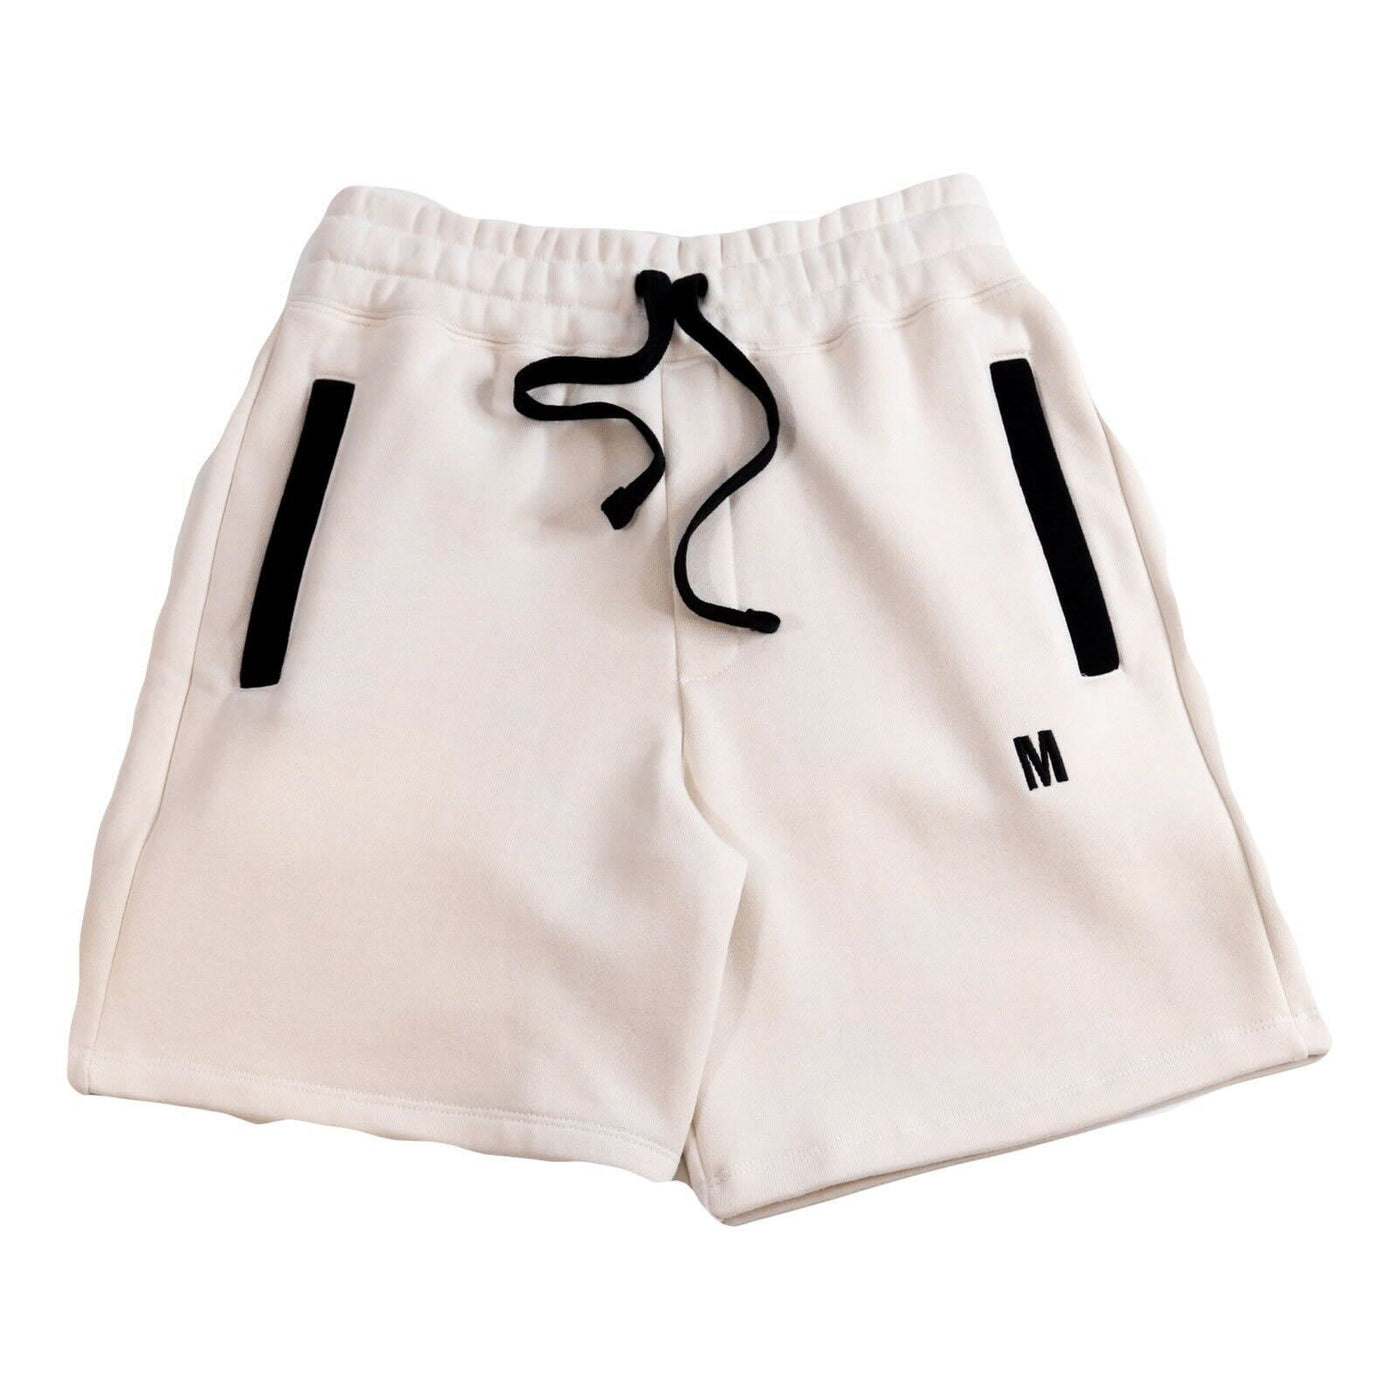 Limited Edition (Ultra) Marathon Shorts - Cream/Black